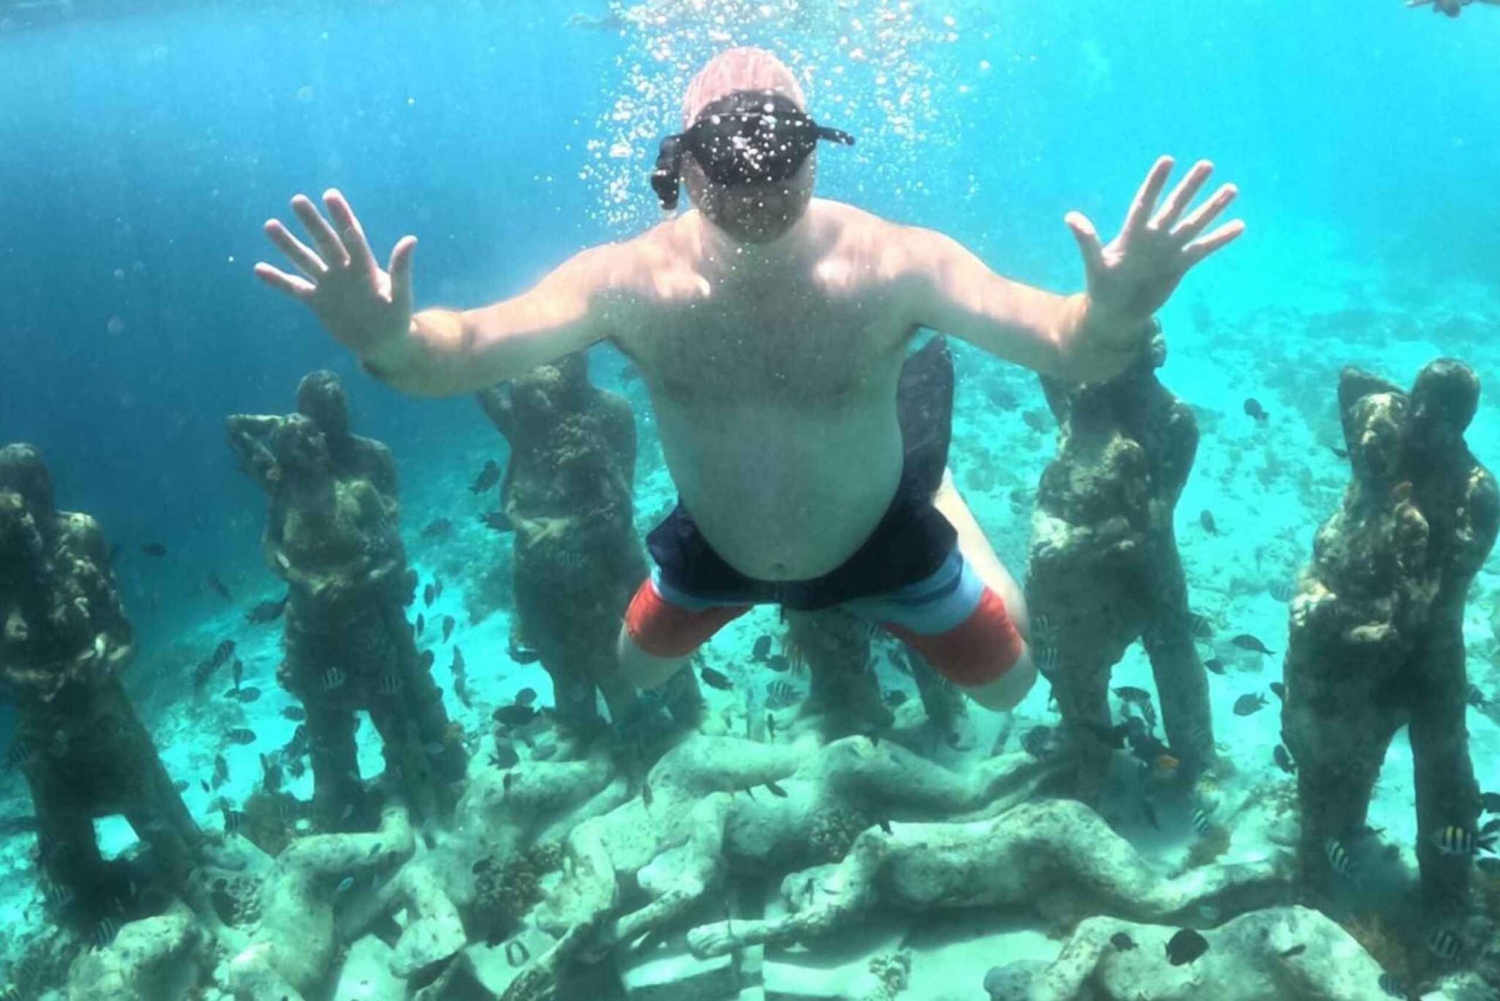 Gili Islands: 3 Island One-day Trip with Snorkeling